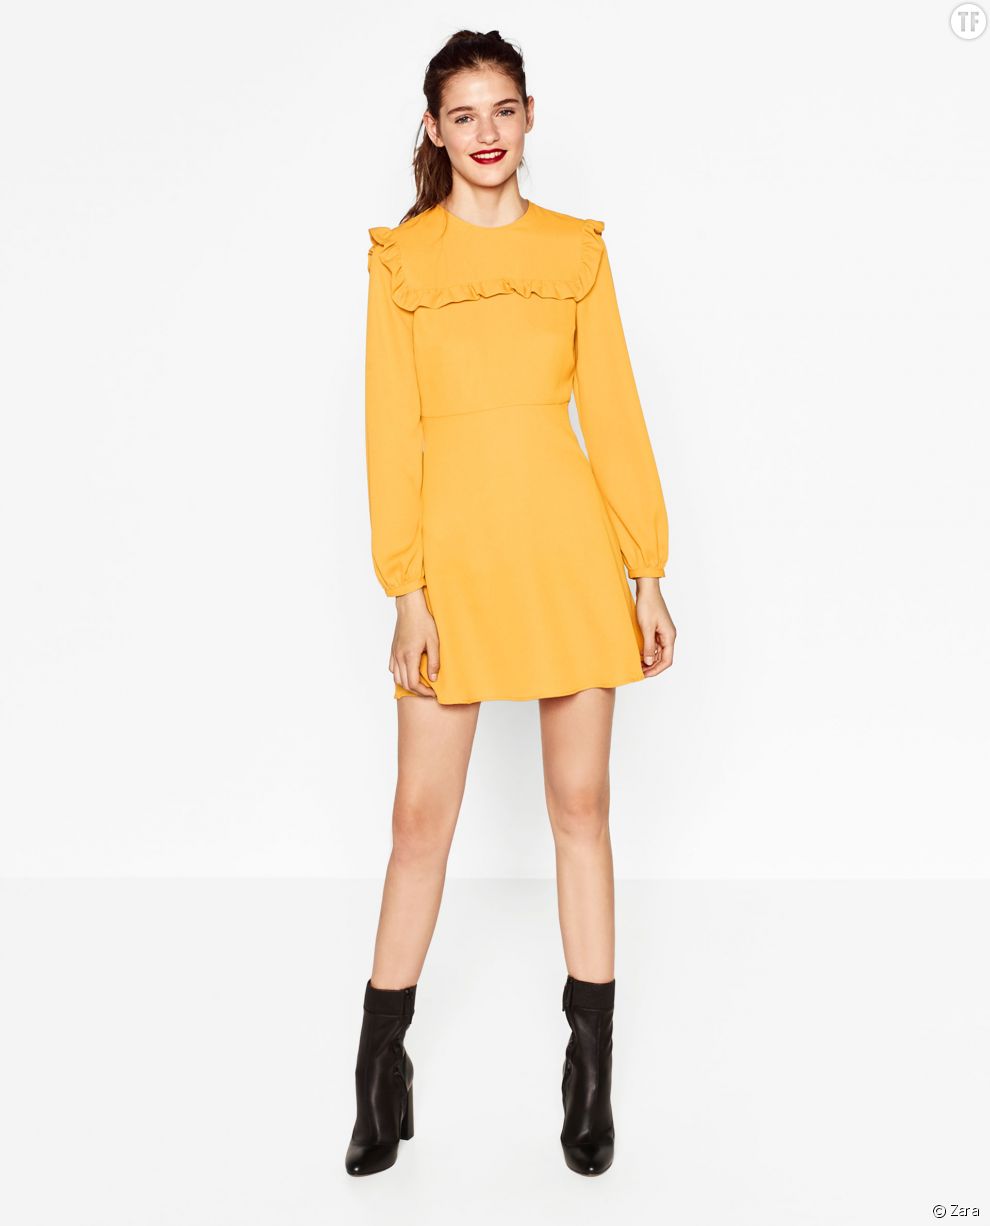  Robe jaune à volants Zara, 49,95€ 